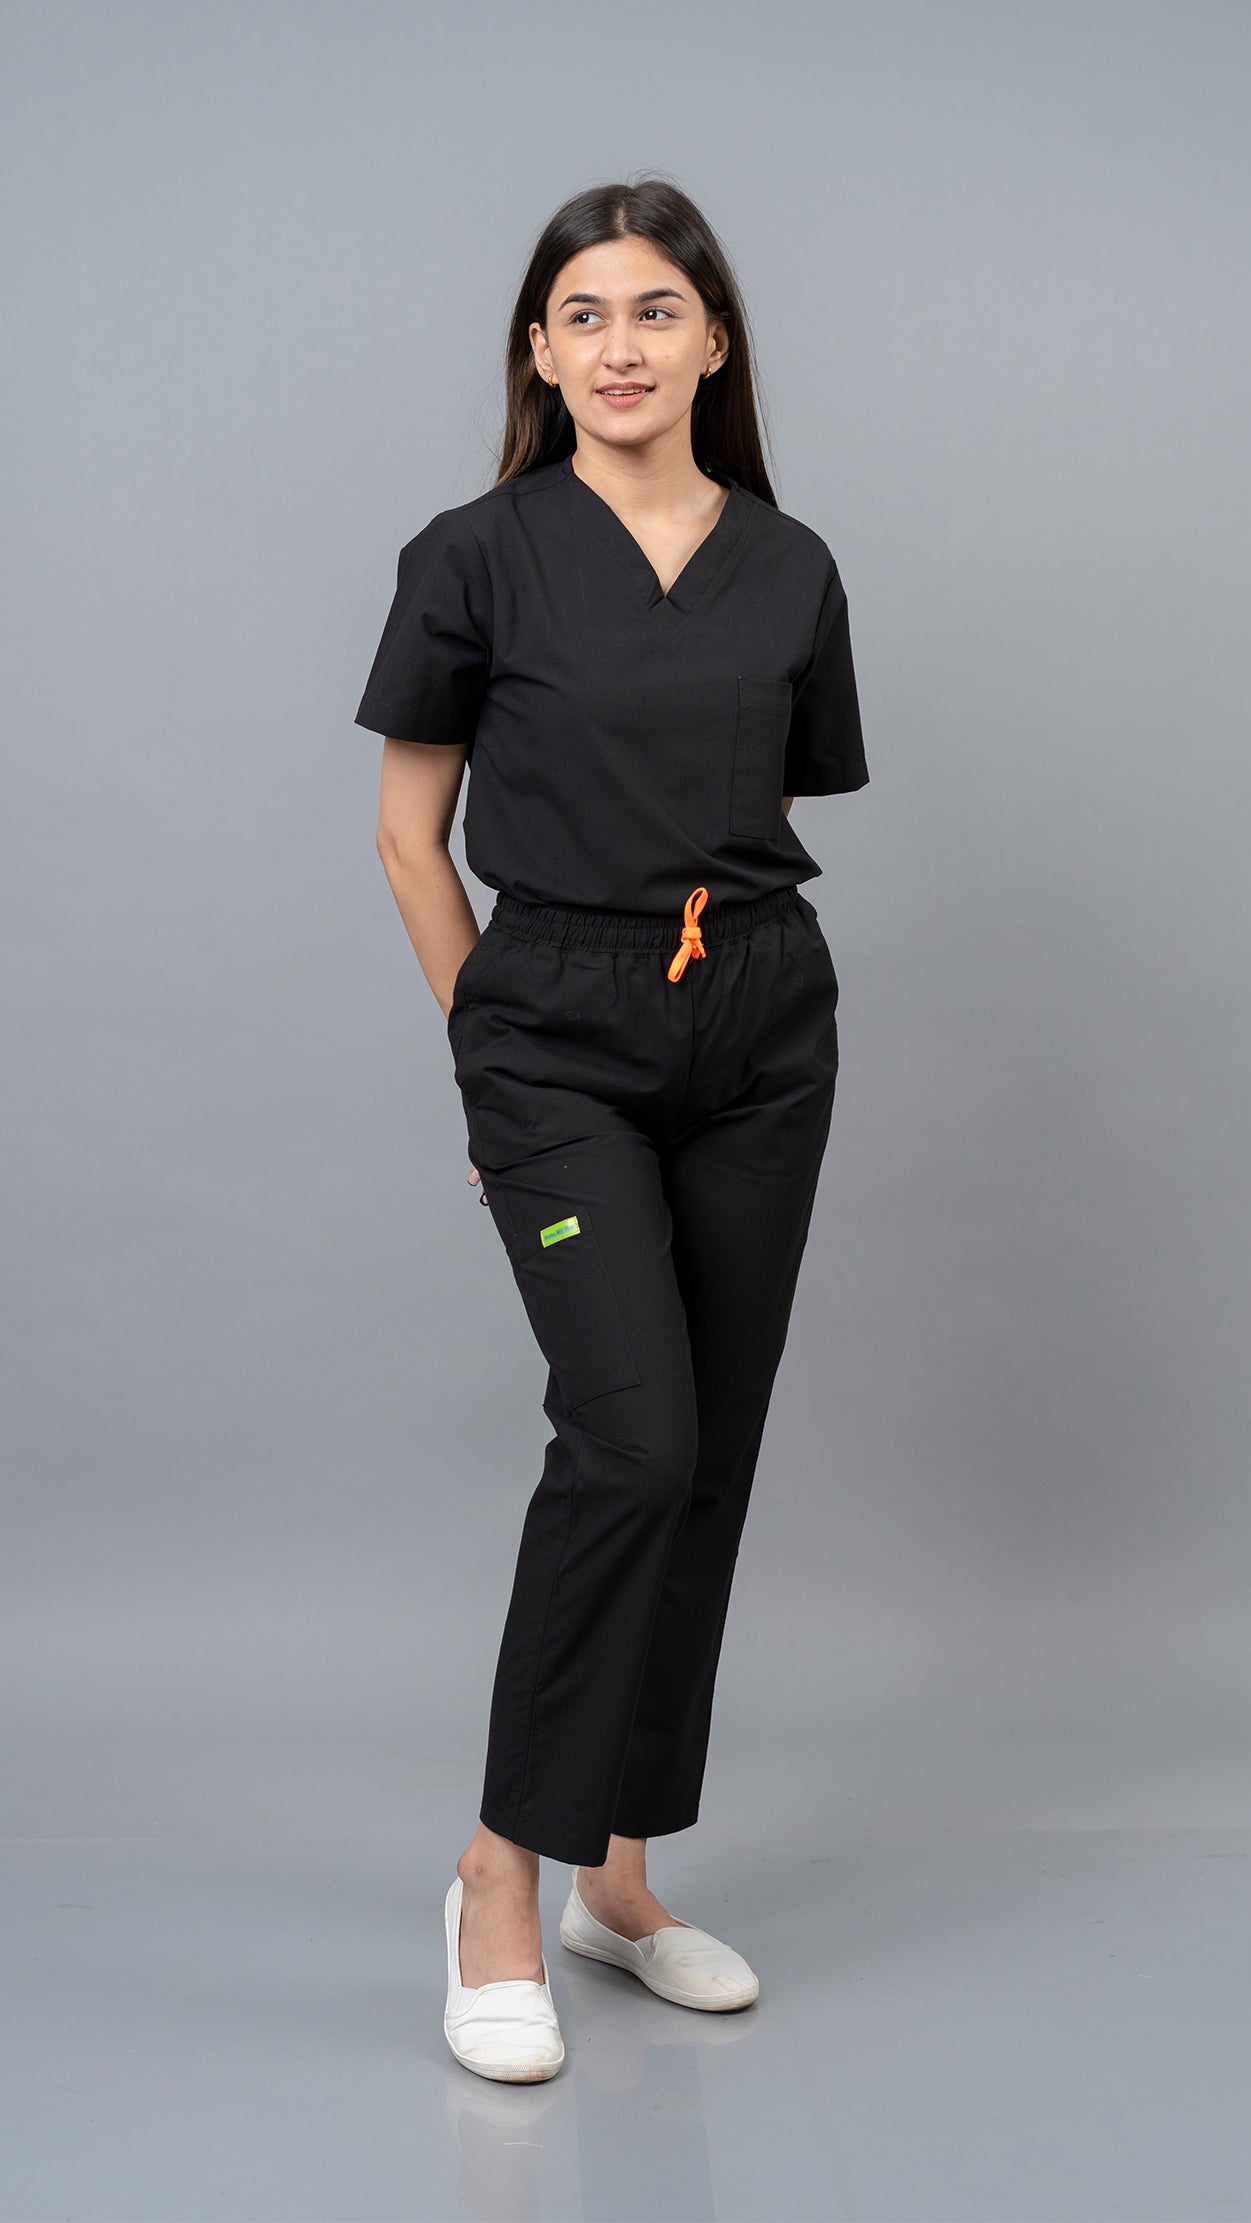 Vastramedwear Medical Scrub Suit for Doctors Women Black